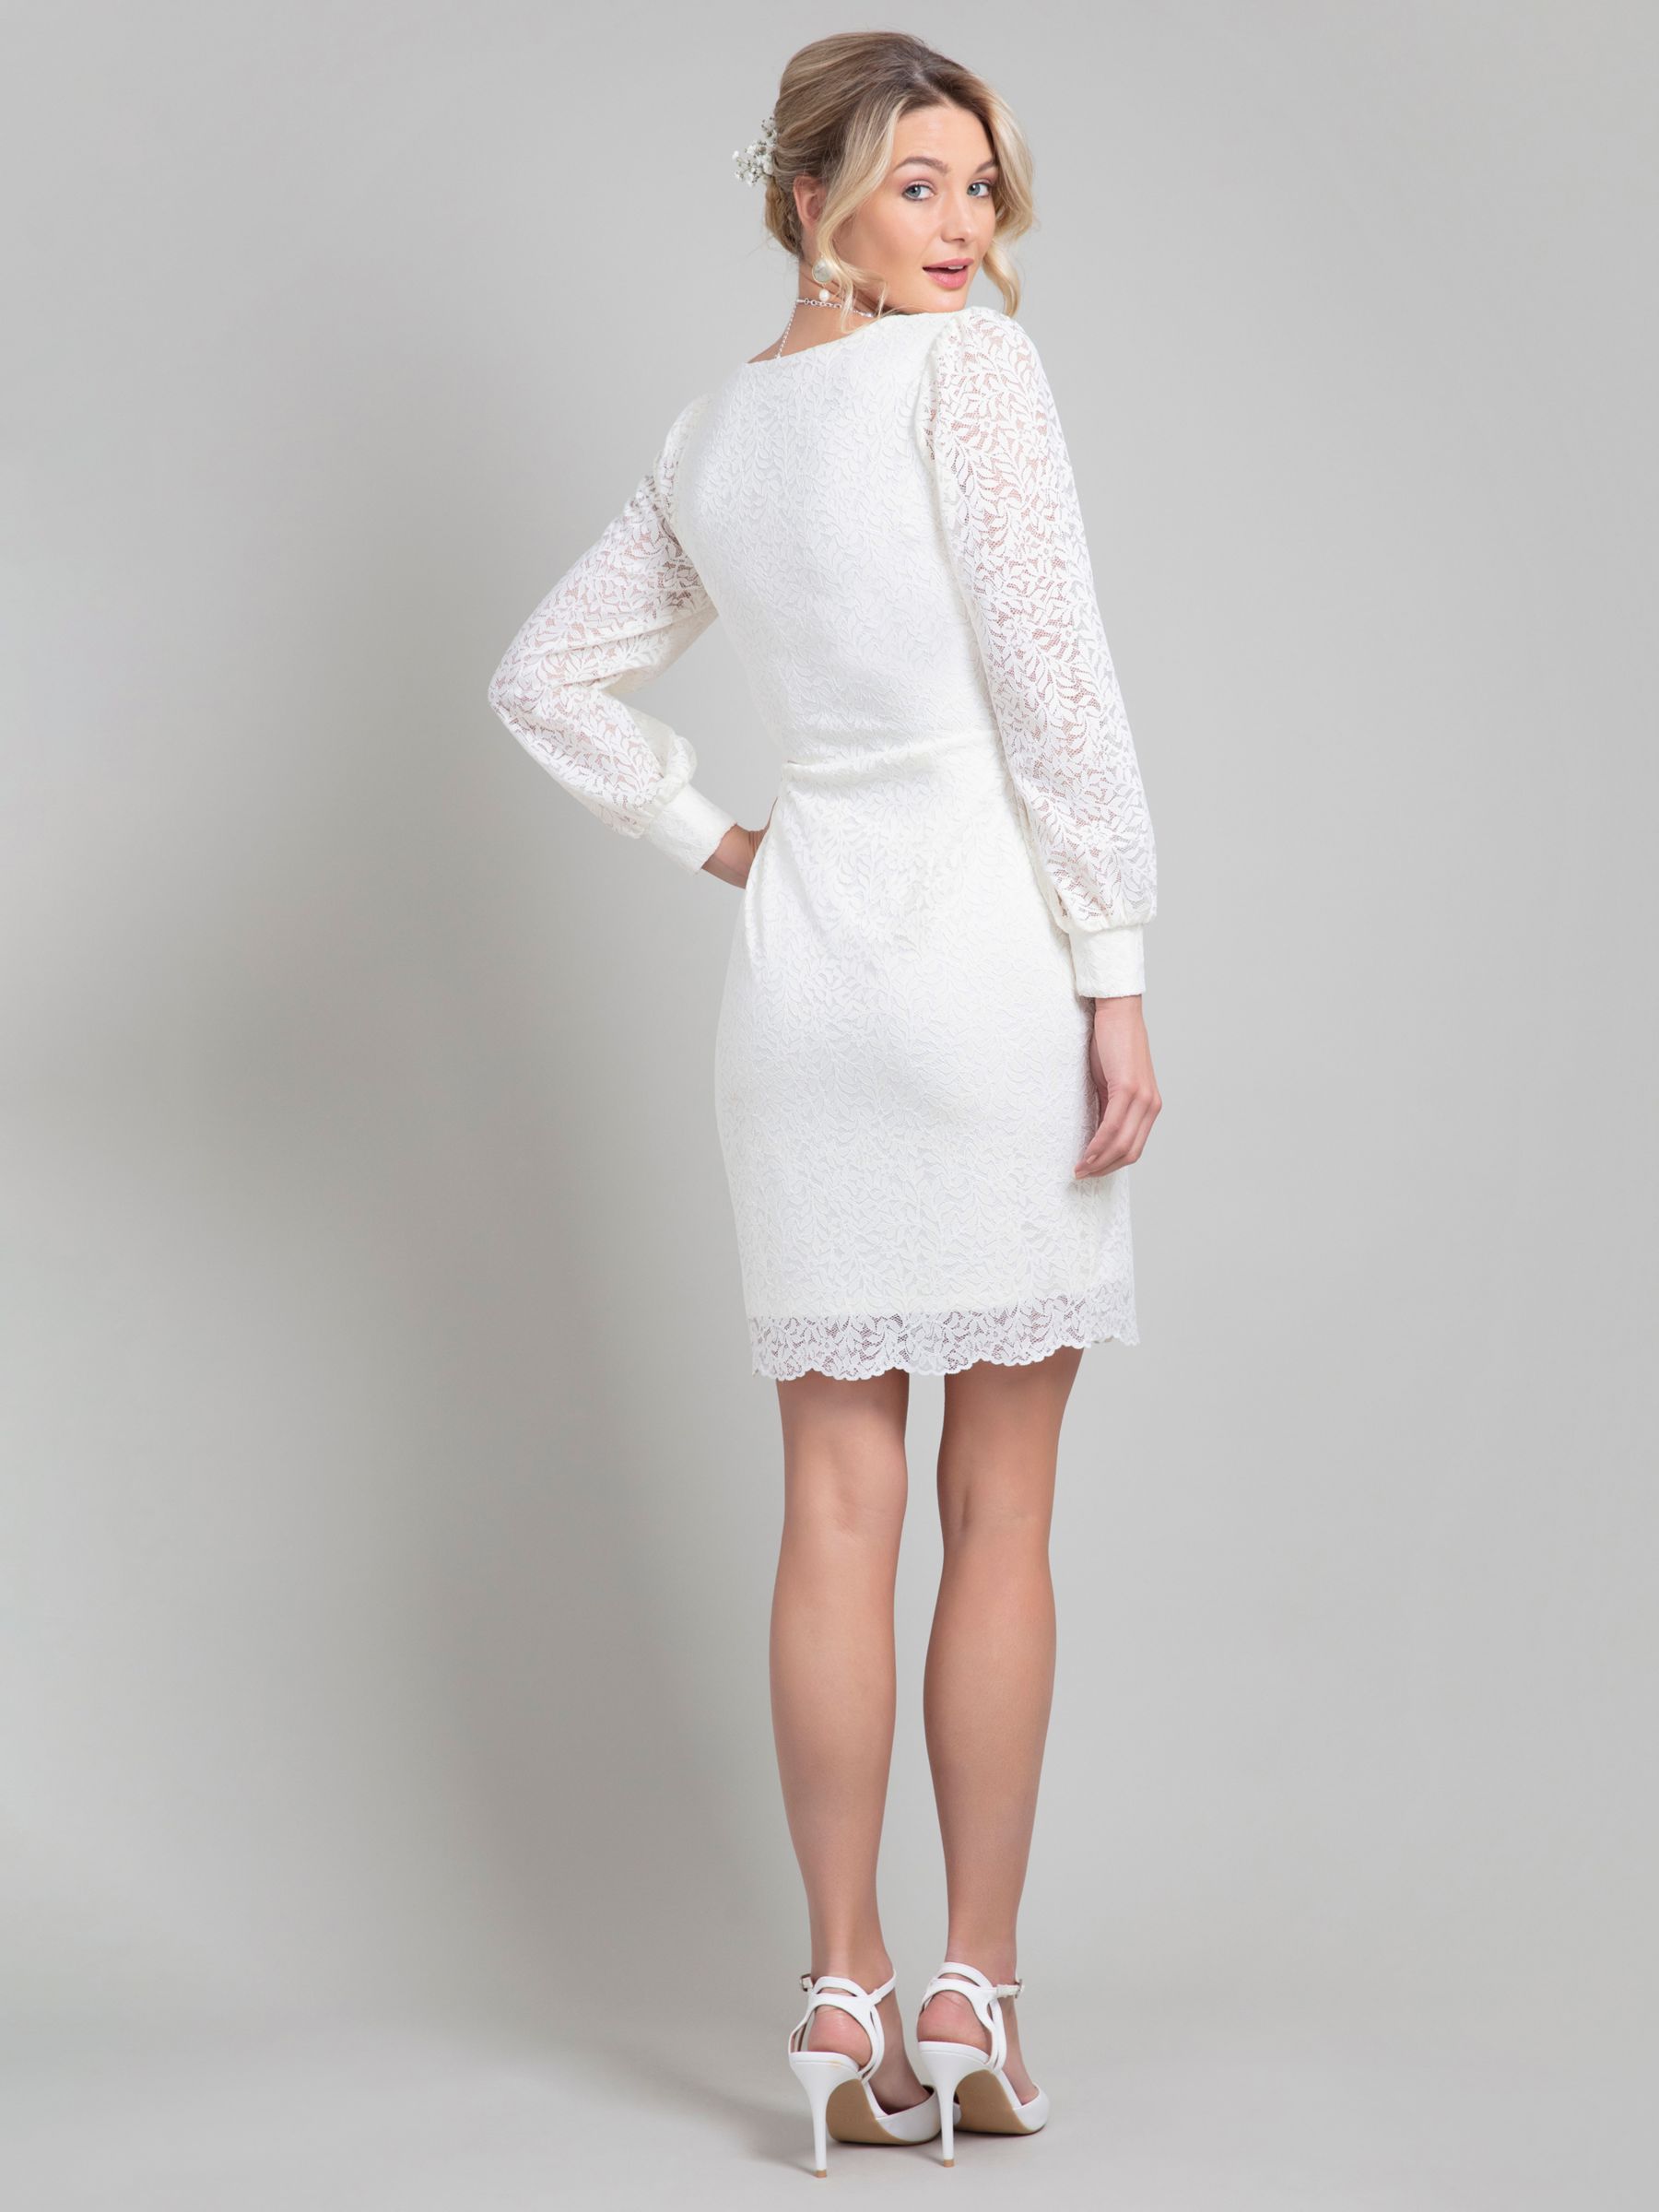 Alie Street Alexis Lace Wedding Dress, Ivory, 6-8